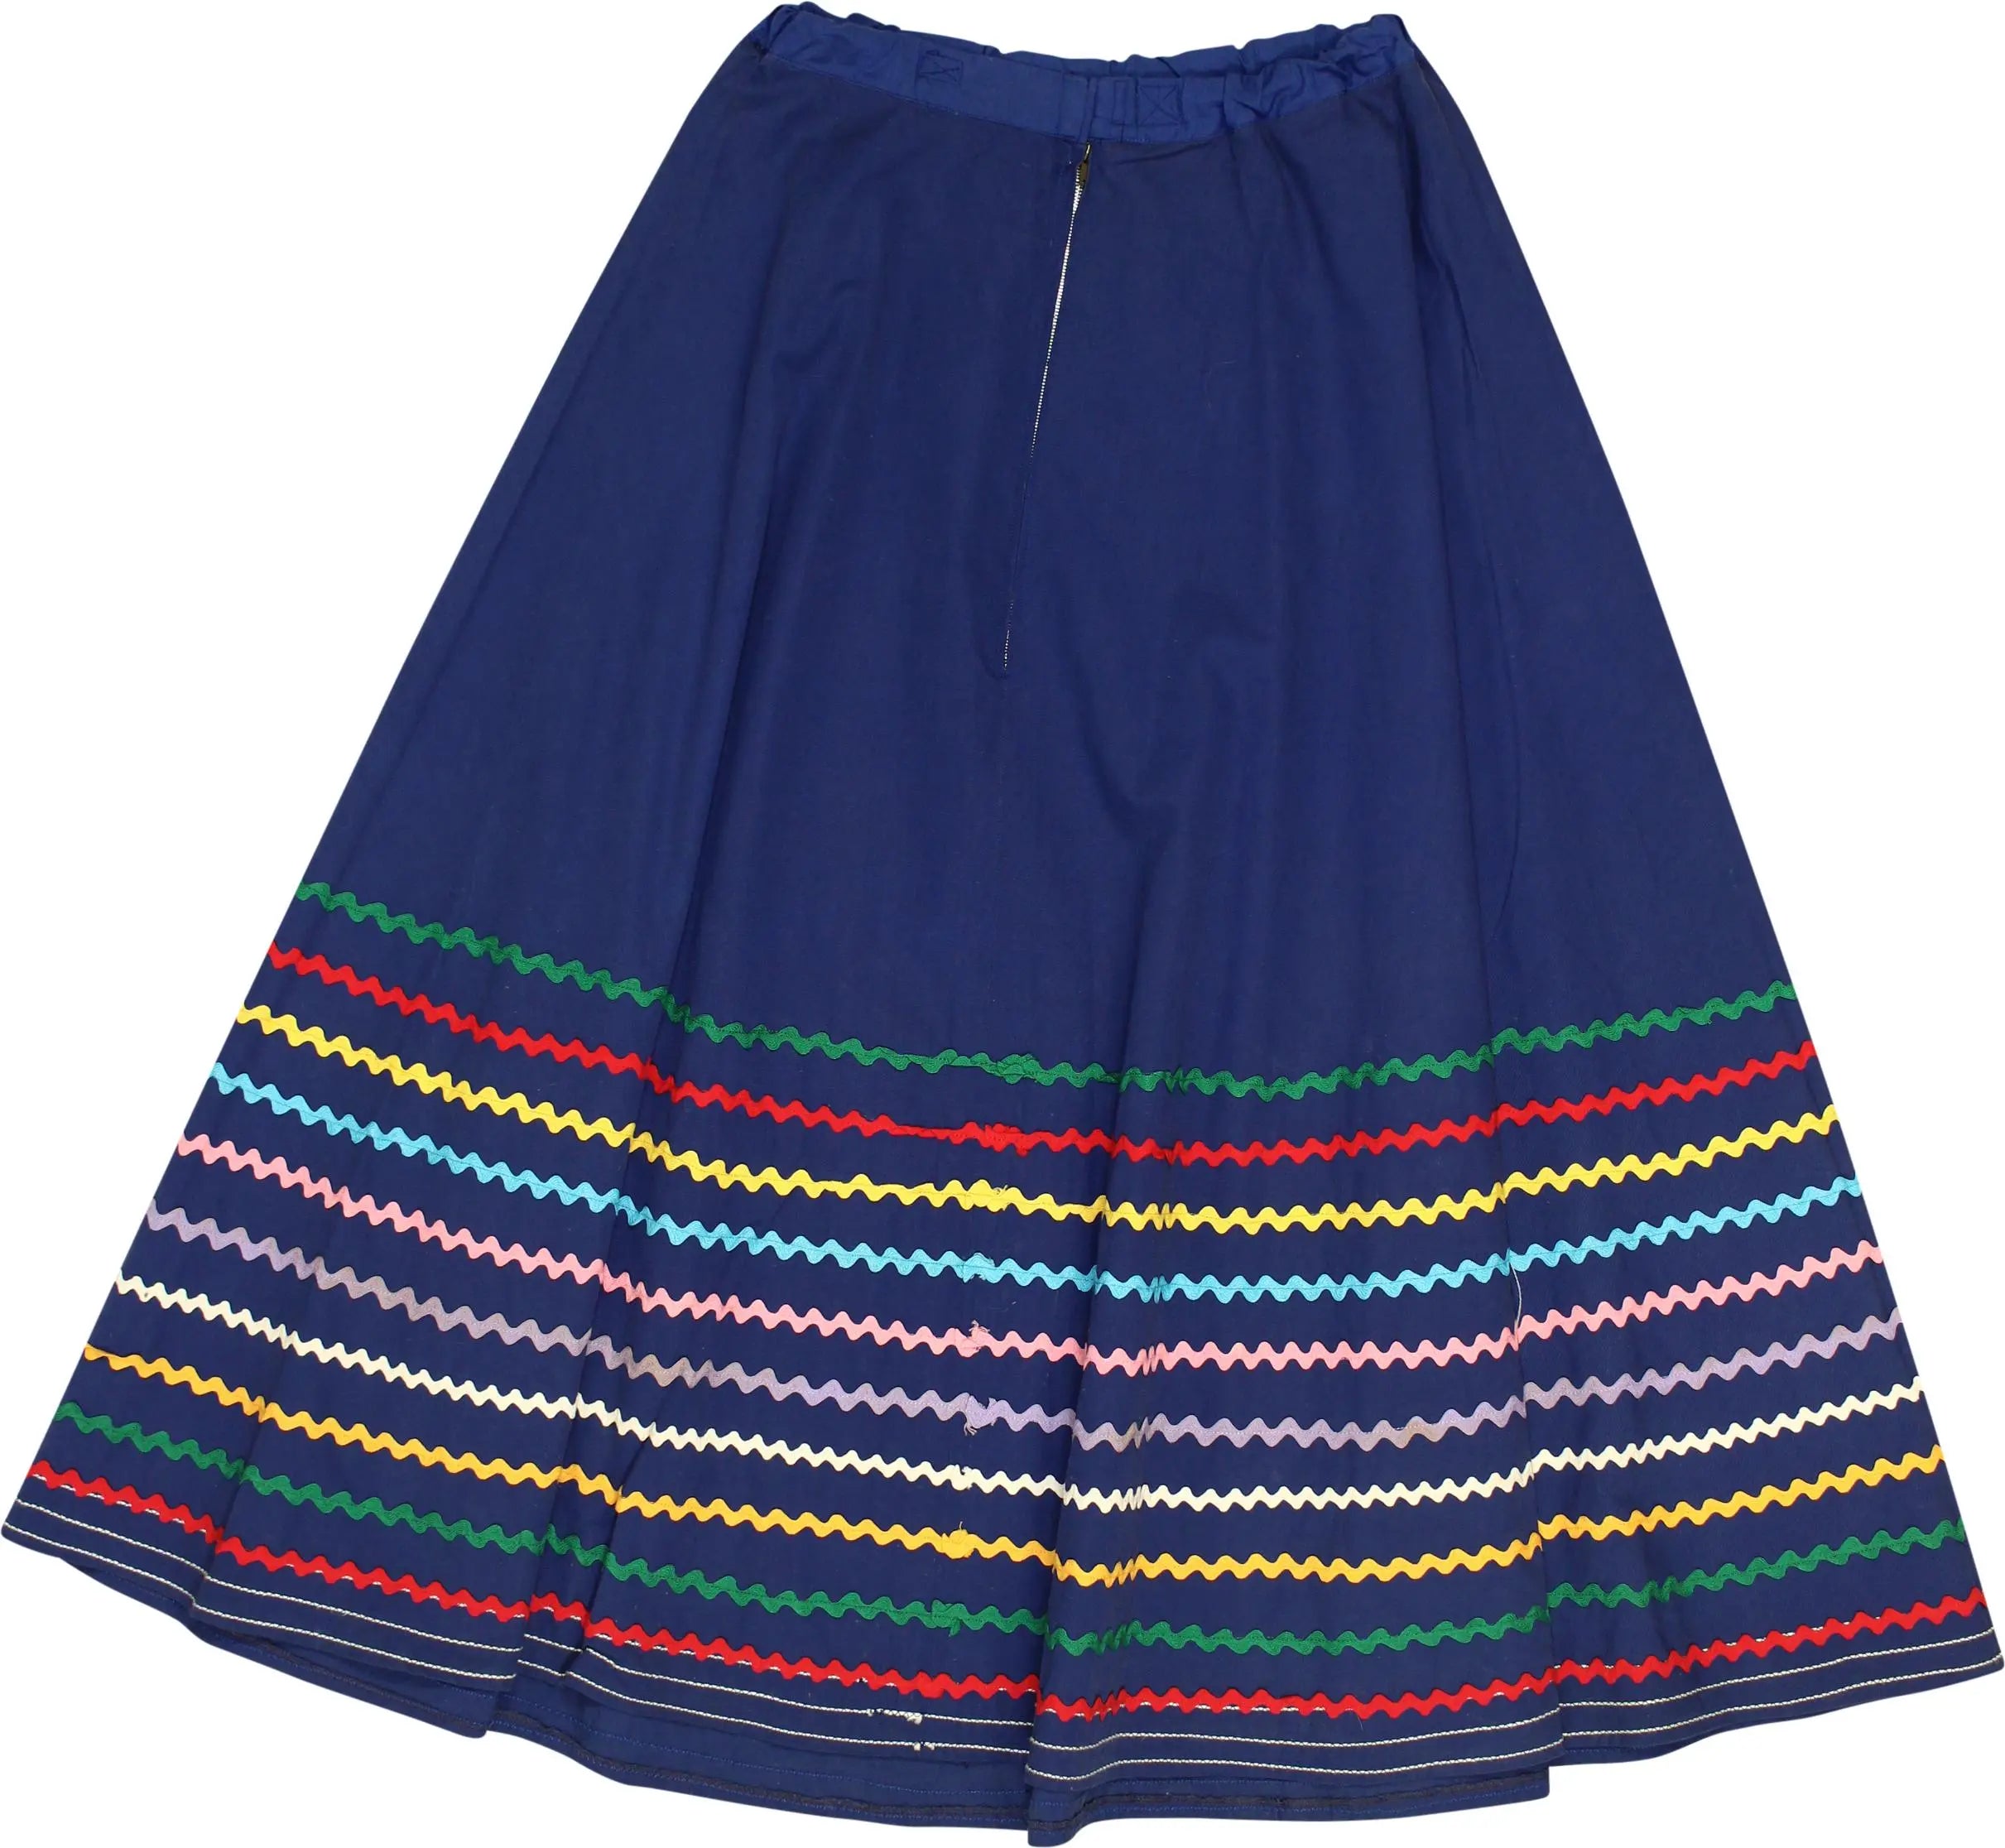 Handmade - Handmade Midi Skirt- ThriftTale.com - Vintage and second handclothing